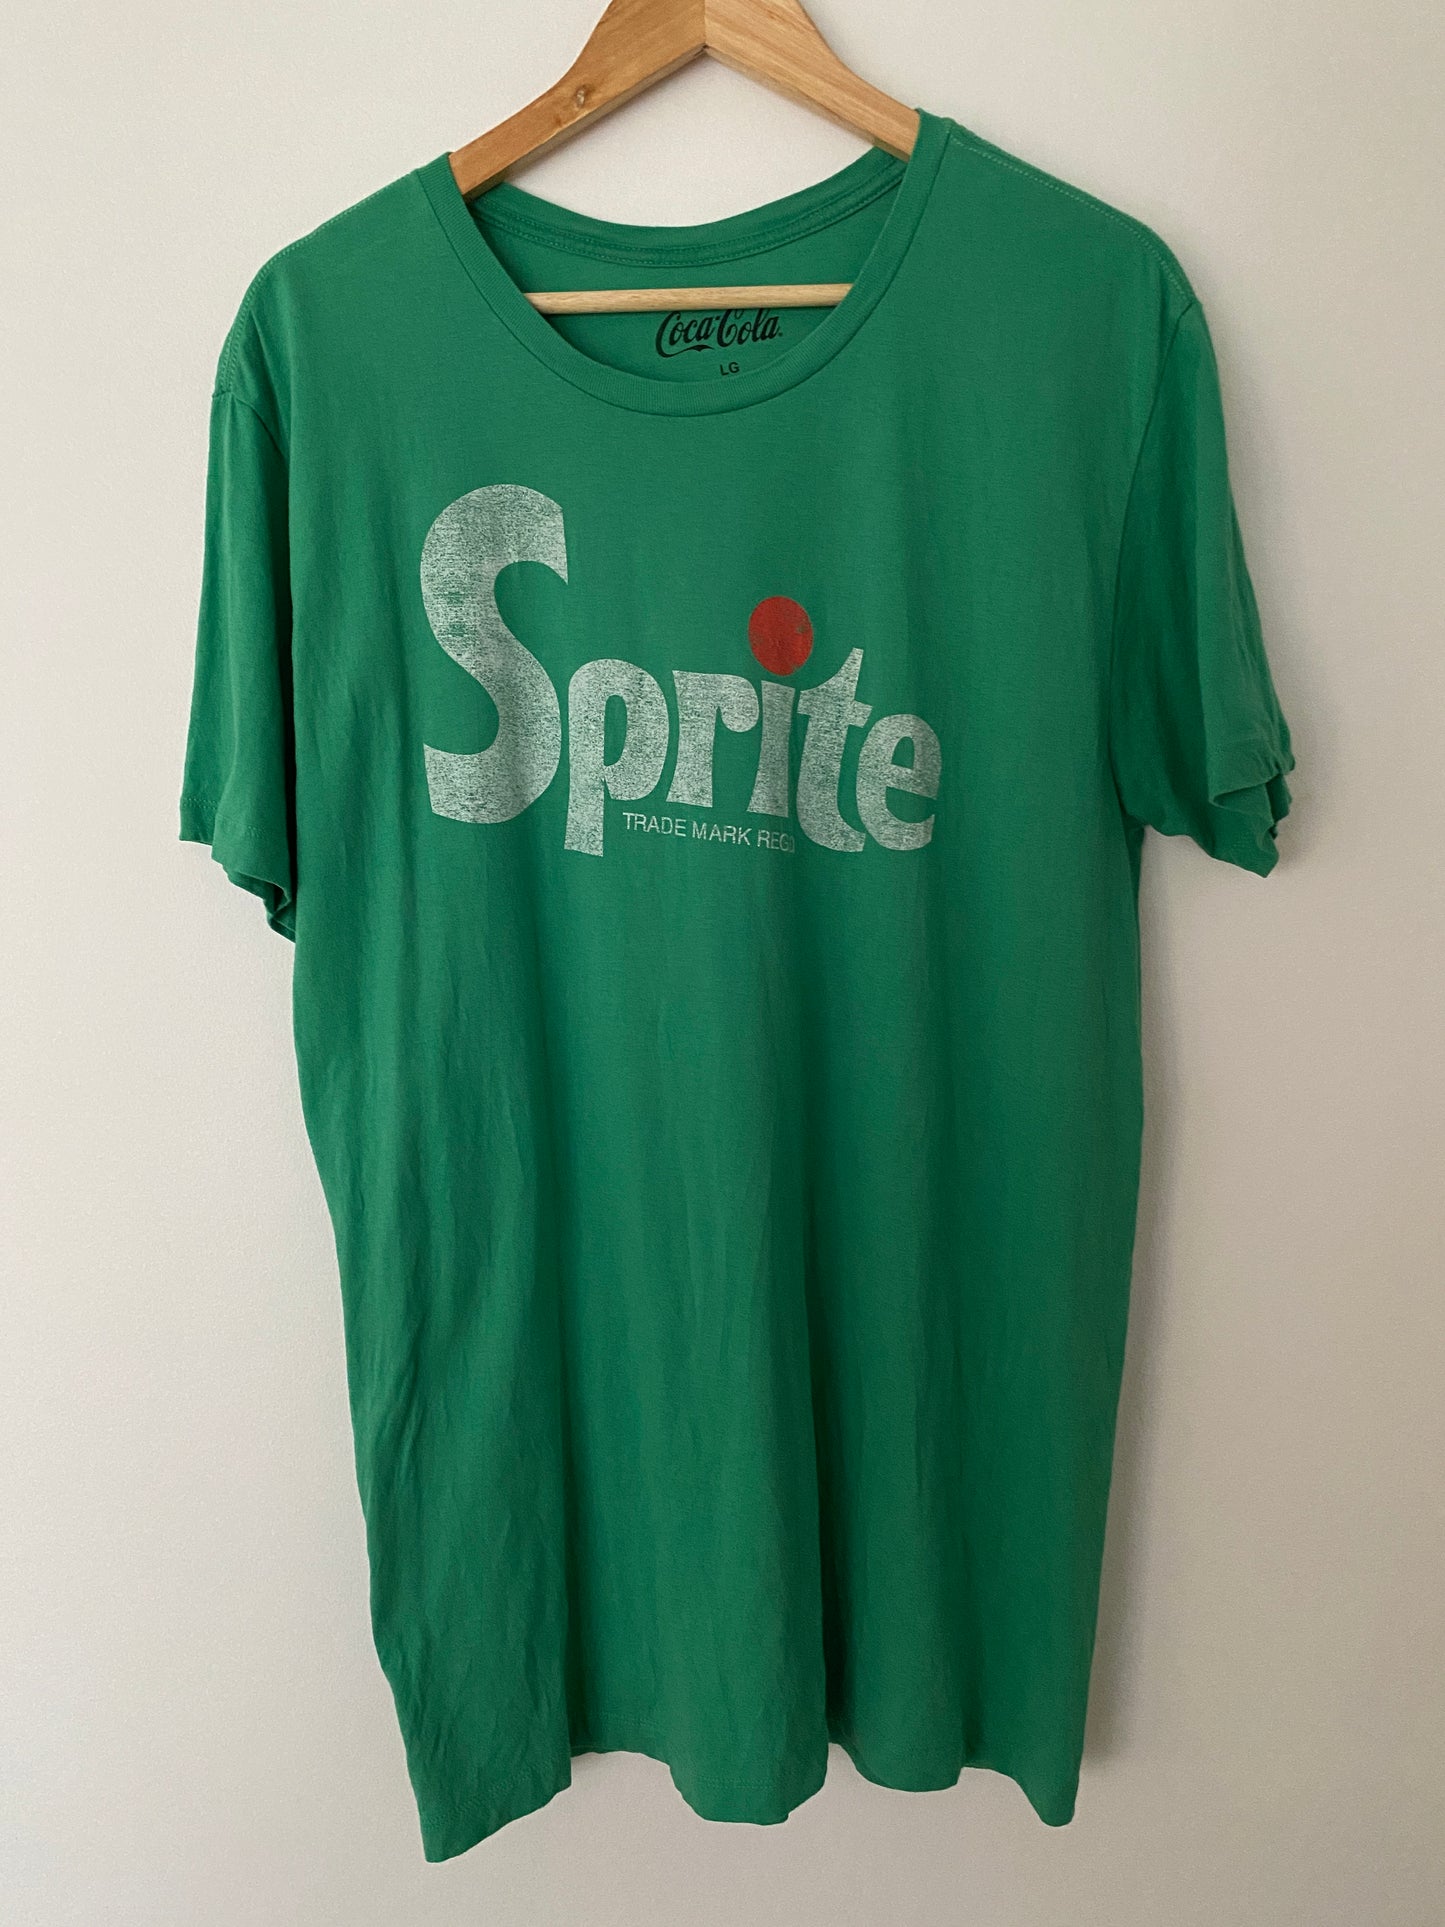 Sprite T-Shirt - L